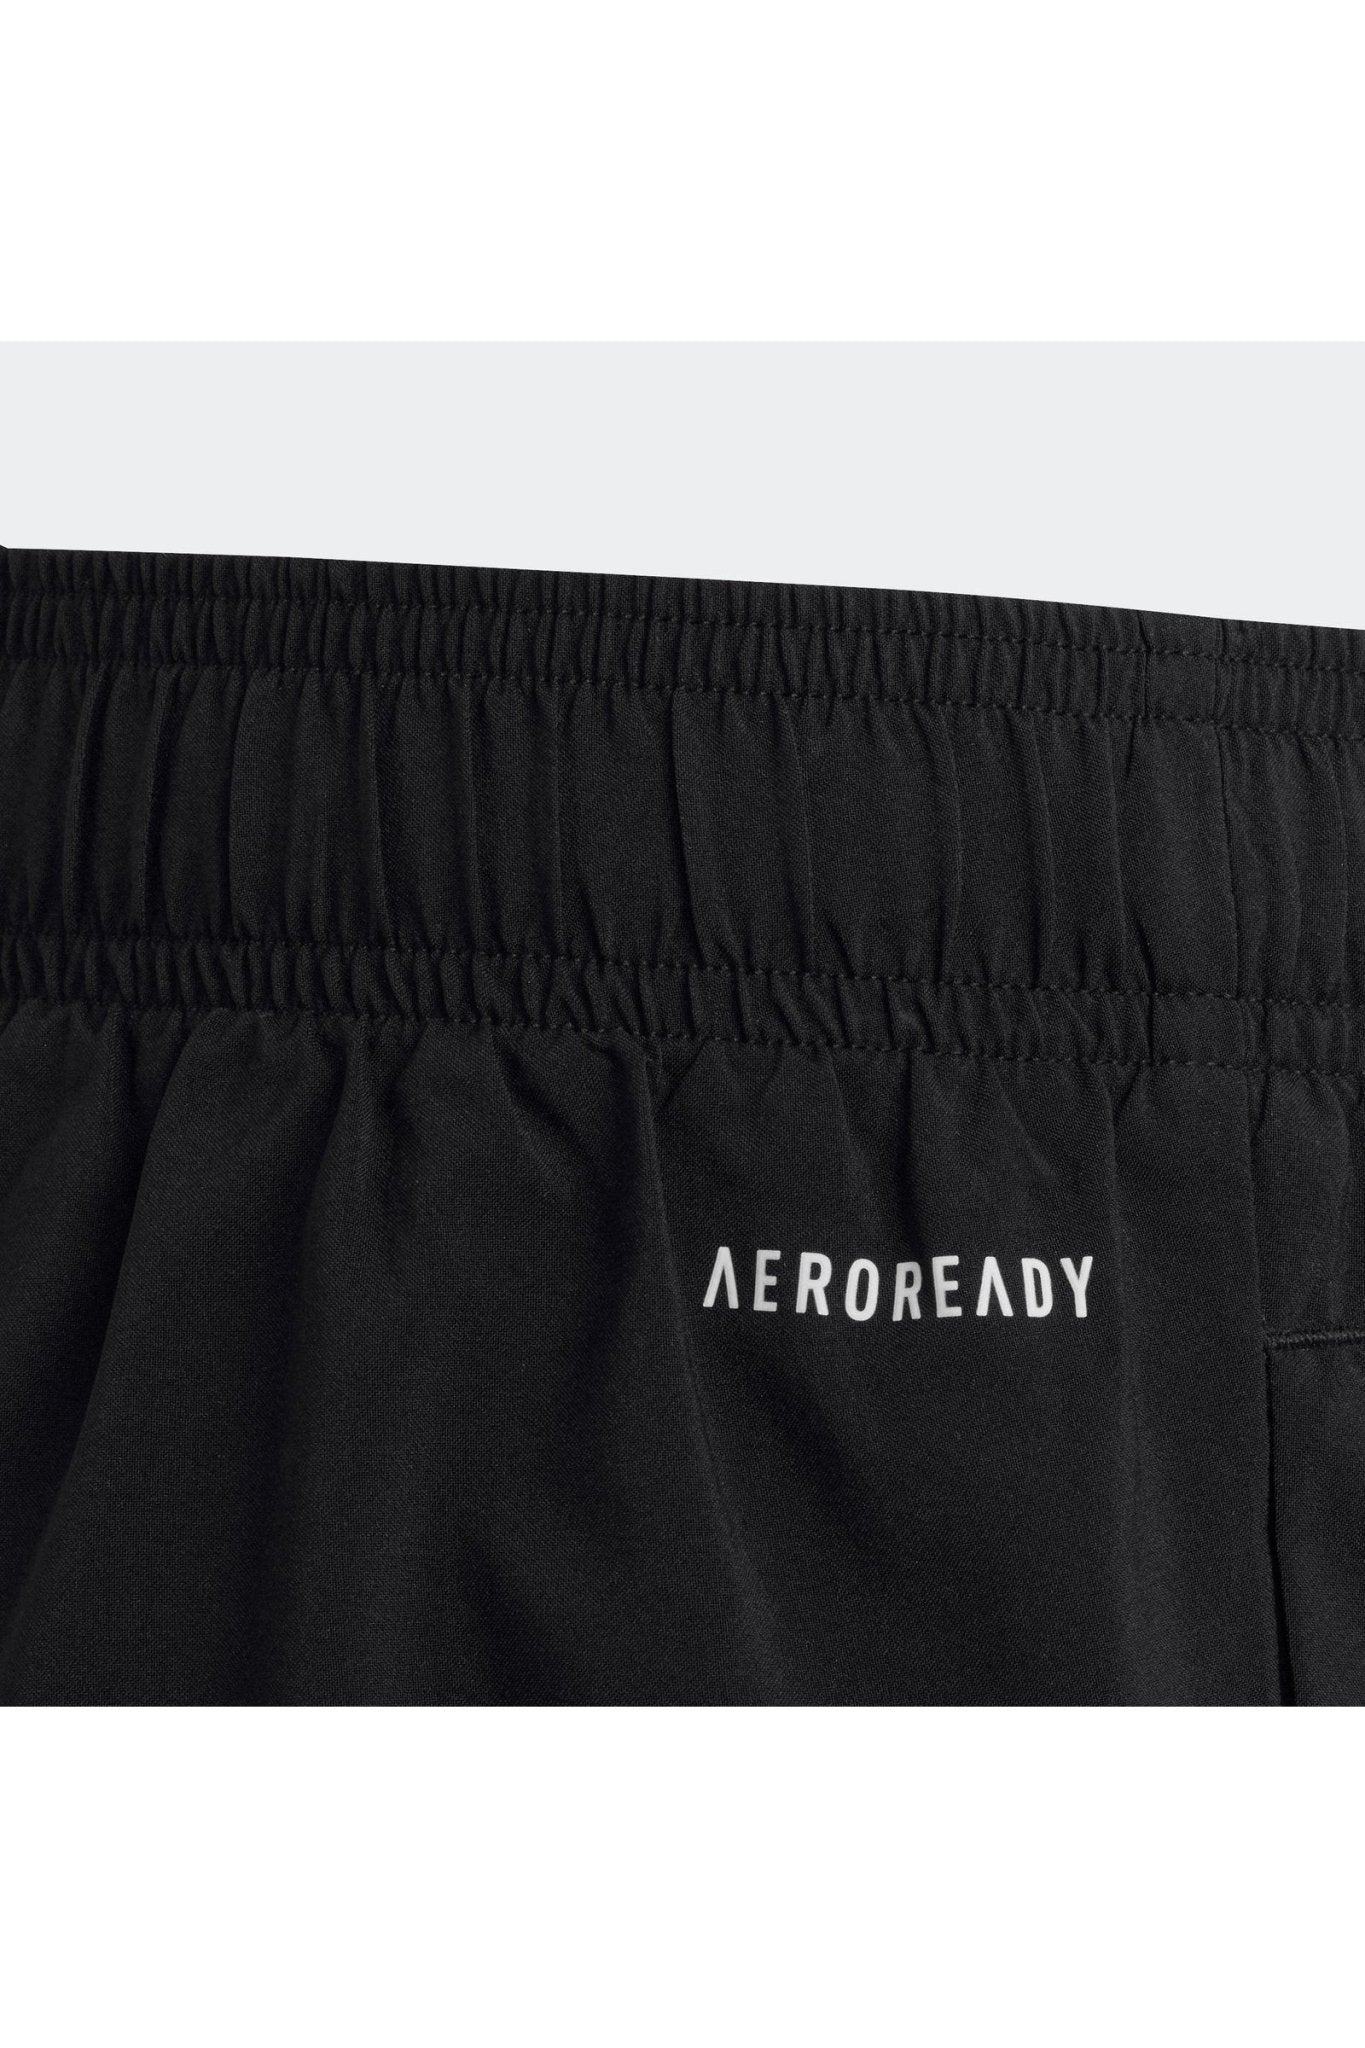 ADIDAS - מכנסיים קצרים לנוער ESSENTIALS בצבע שחור - MASHBIR//365